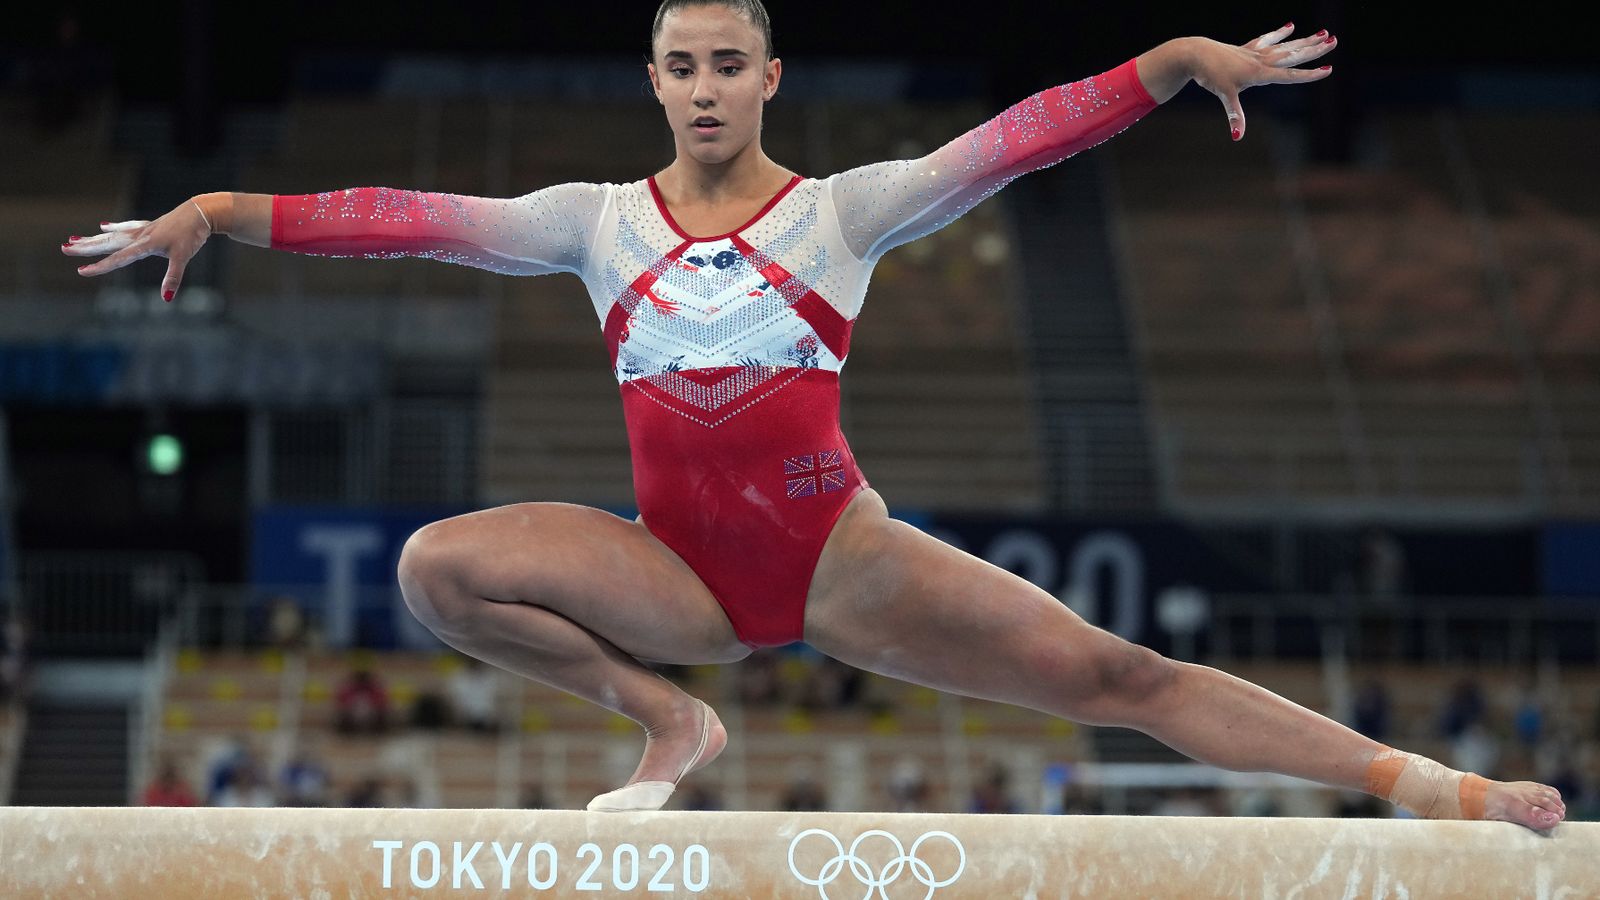 Tokyo 2020 Team Gbs Womens Gymnastics Team Win Olympic Bronze To